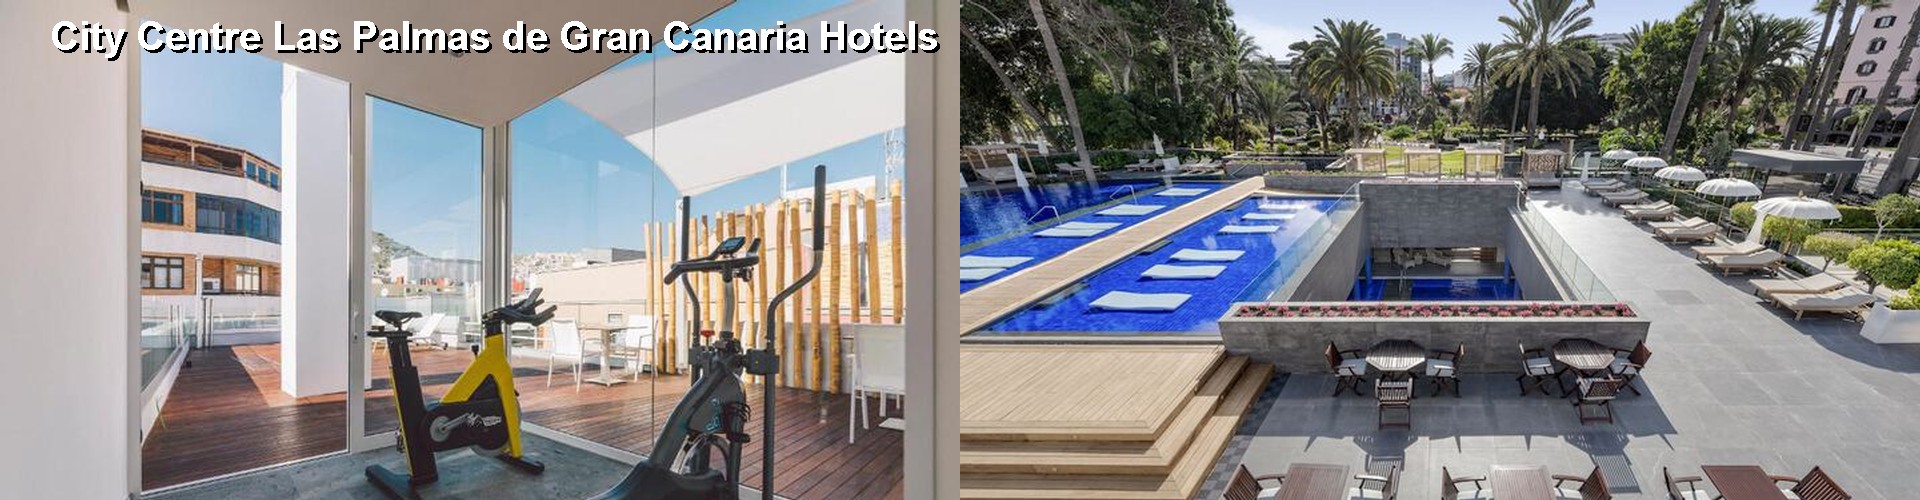 5 Best Hotels near City Centre Las Palmas de Gran Canaria